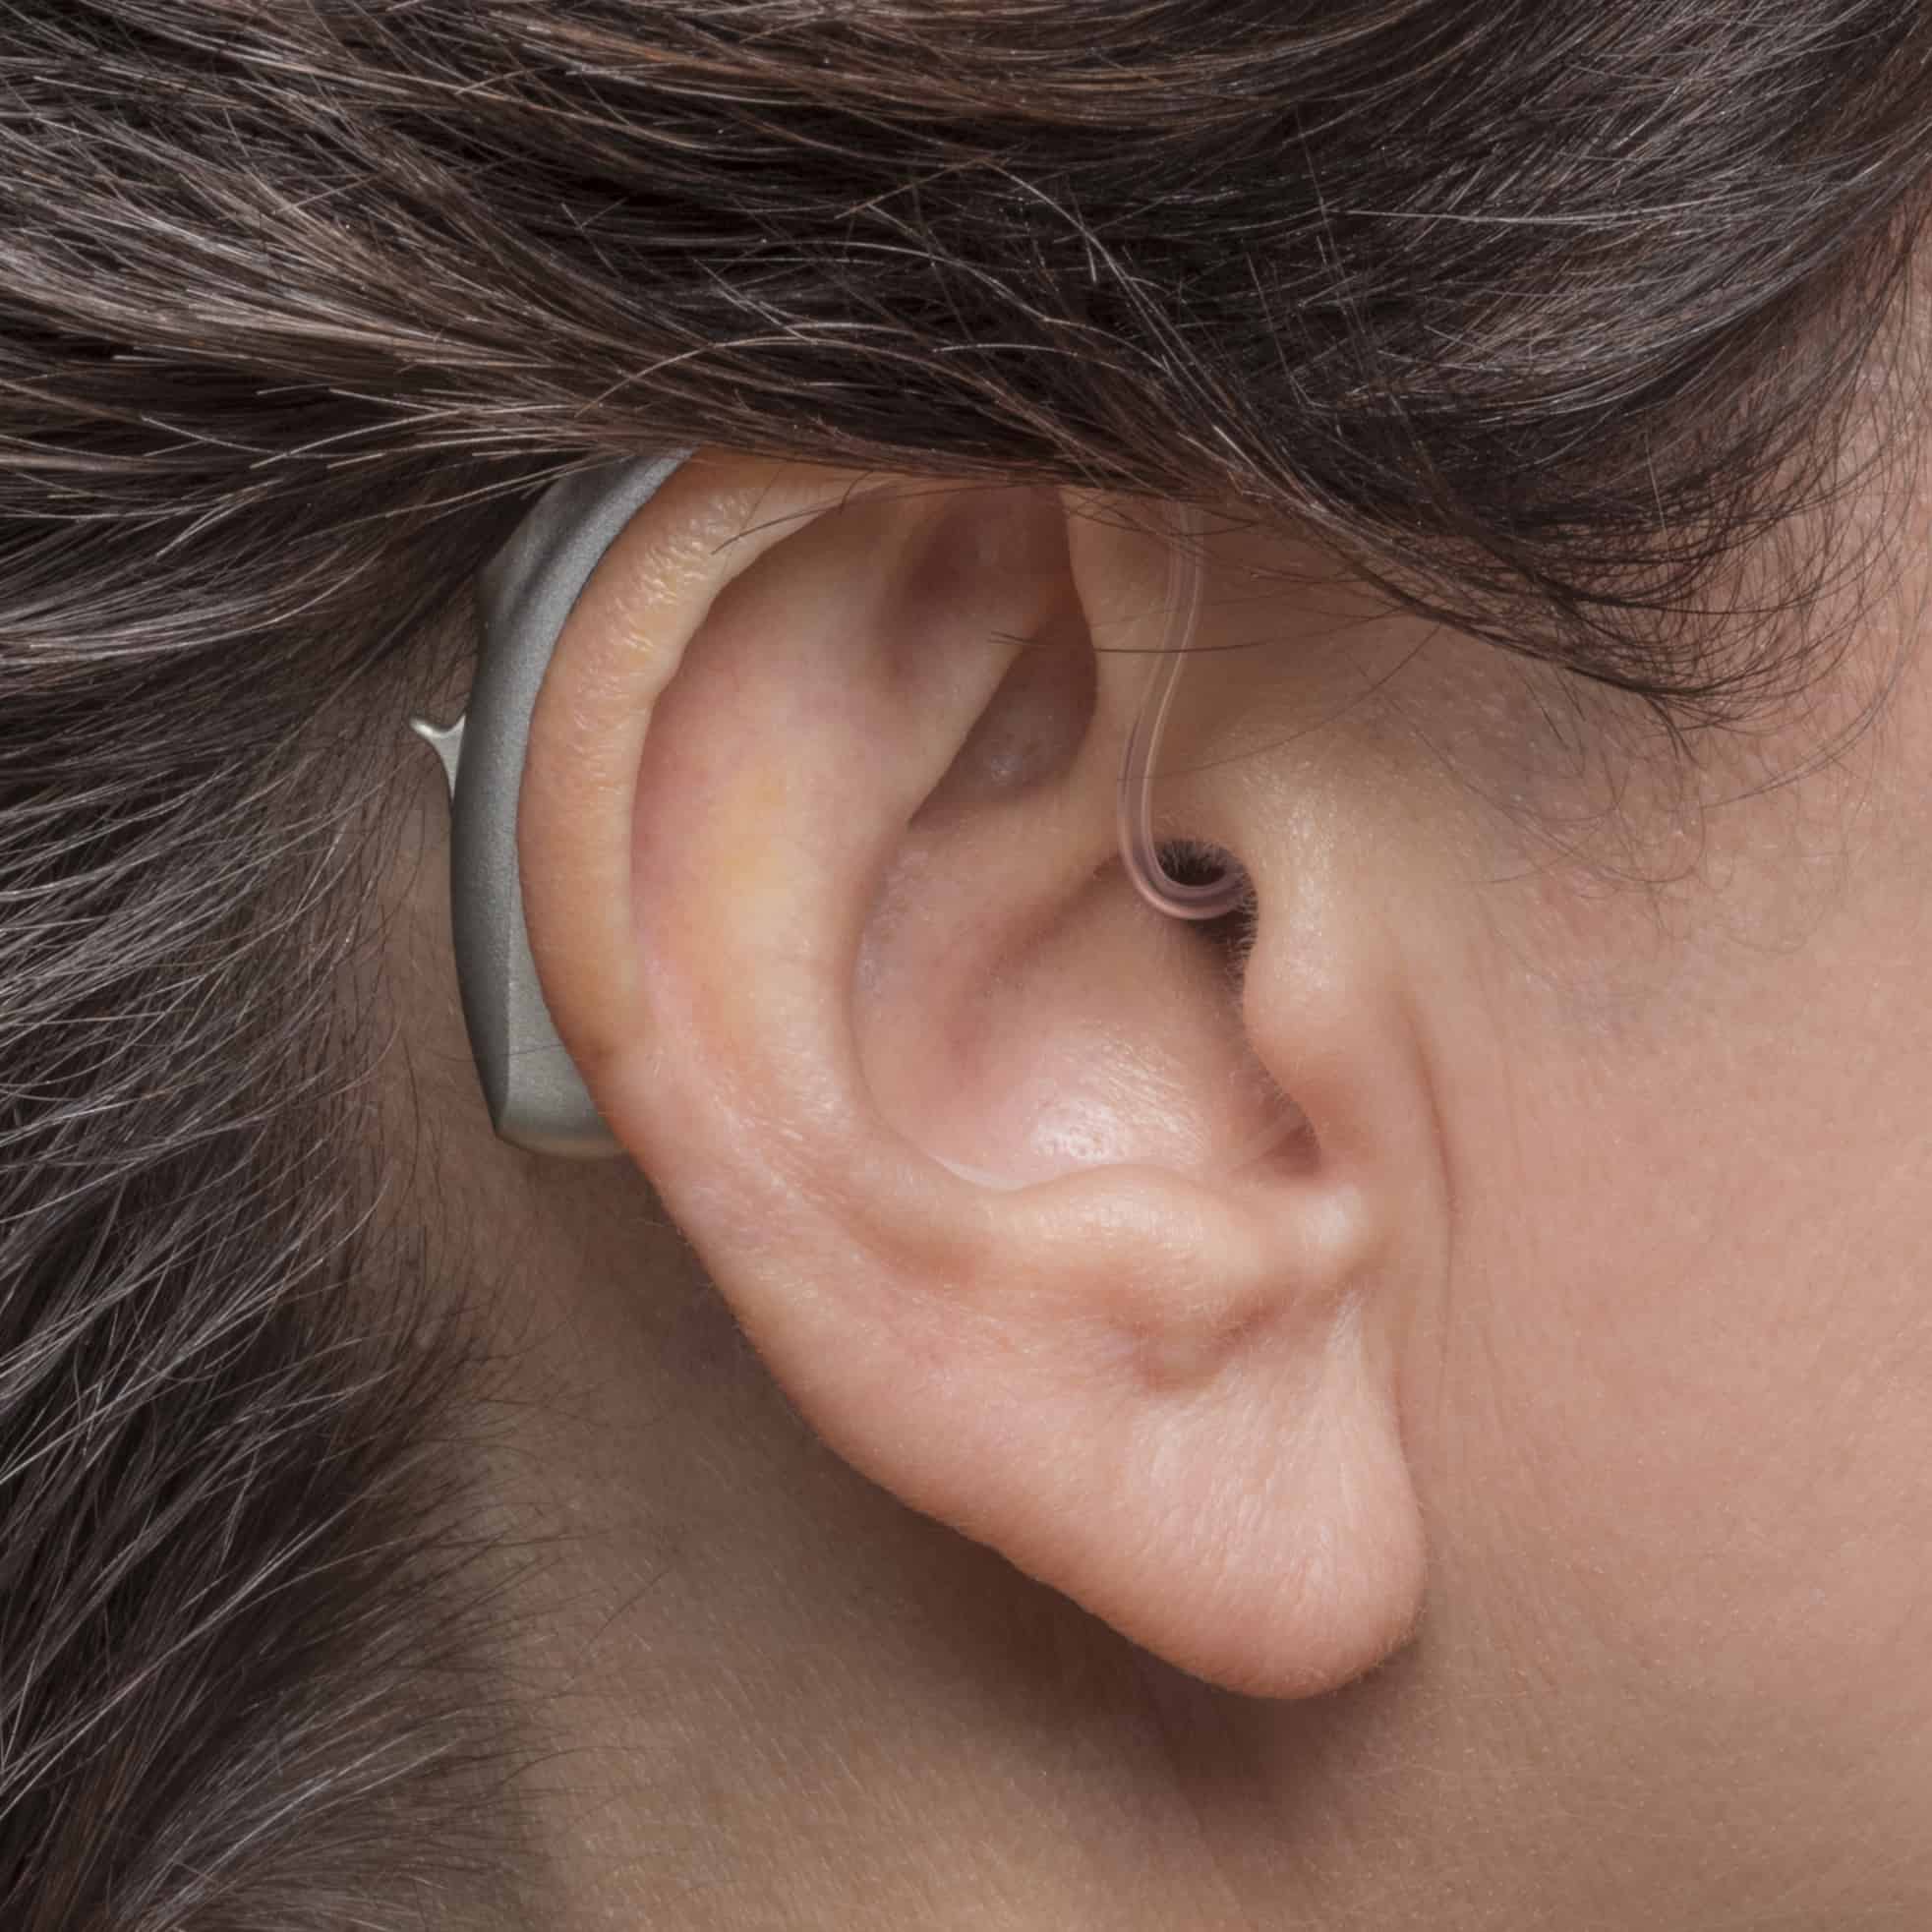 Phonak - BTE hearing aids. Photo credit - Phonak